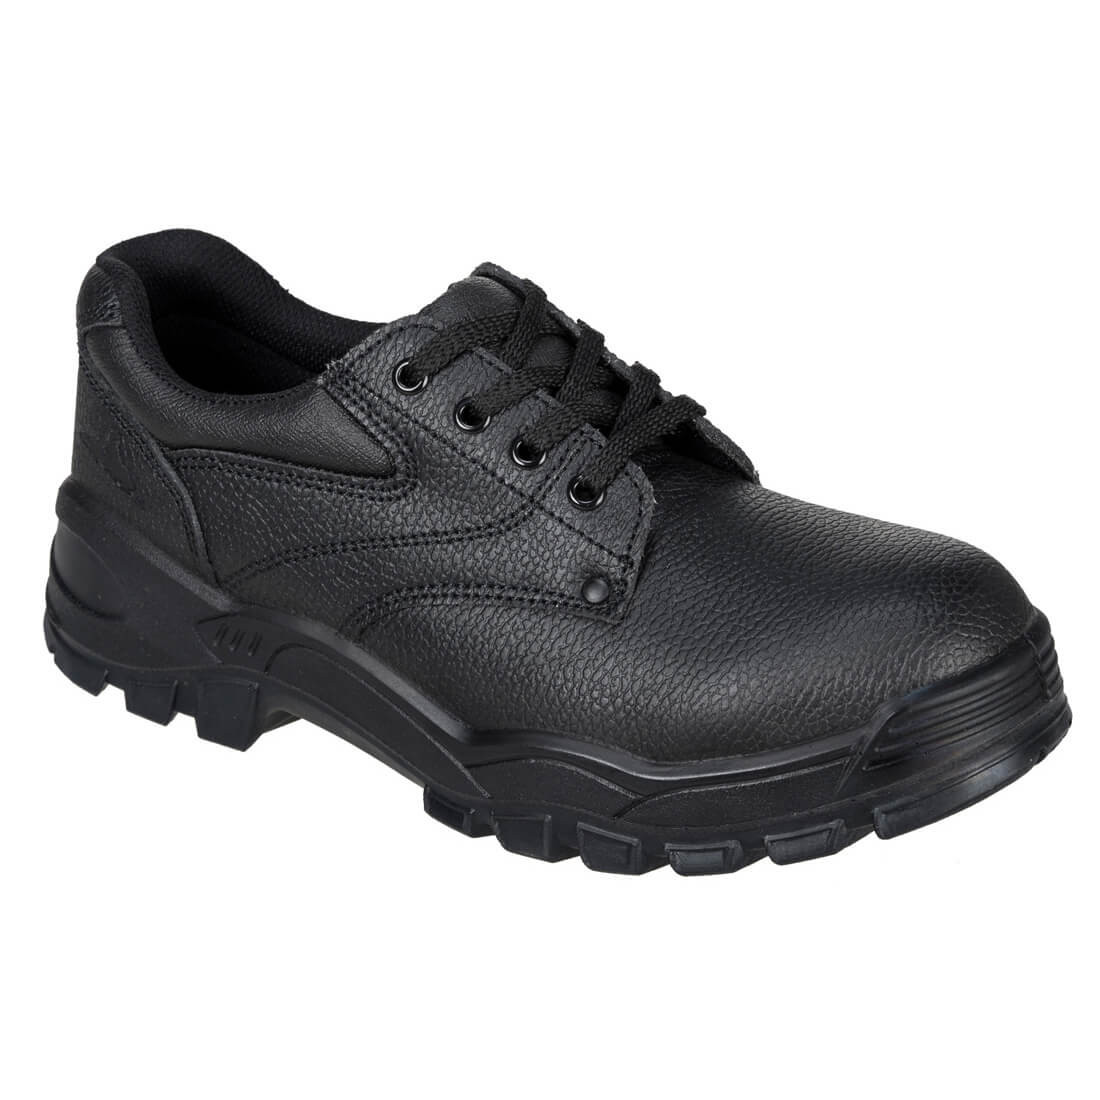 Zapato de trabajo O1 - Calzado de protección